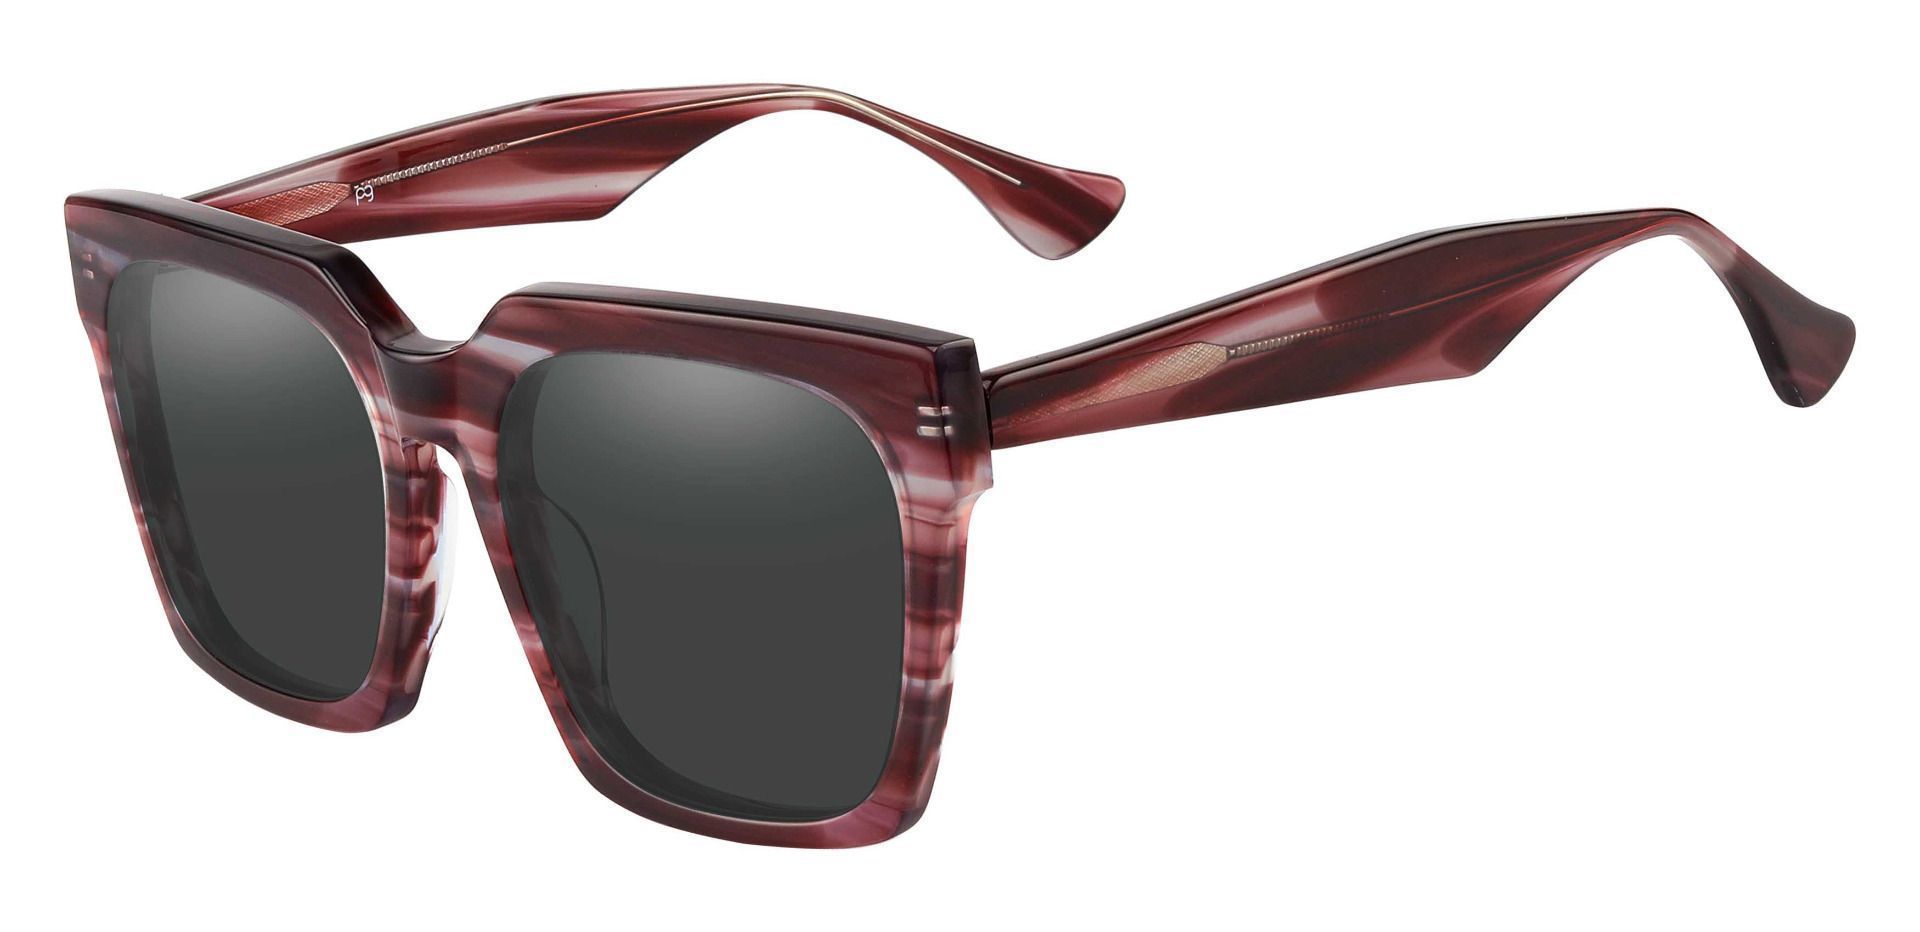 Harlan Square Prescription Sunglasses - Striped Frame With Gray Lenses	